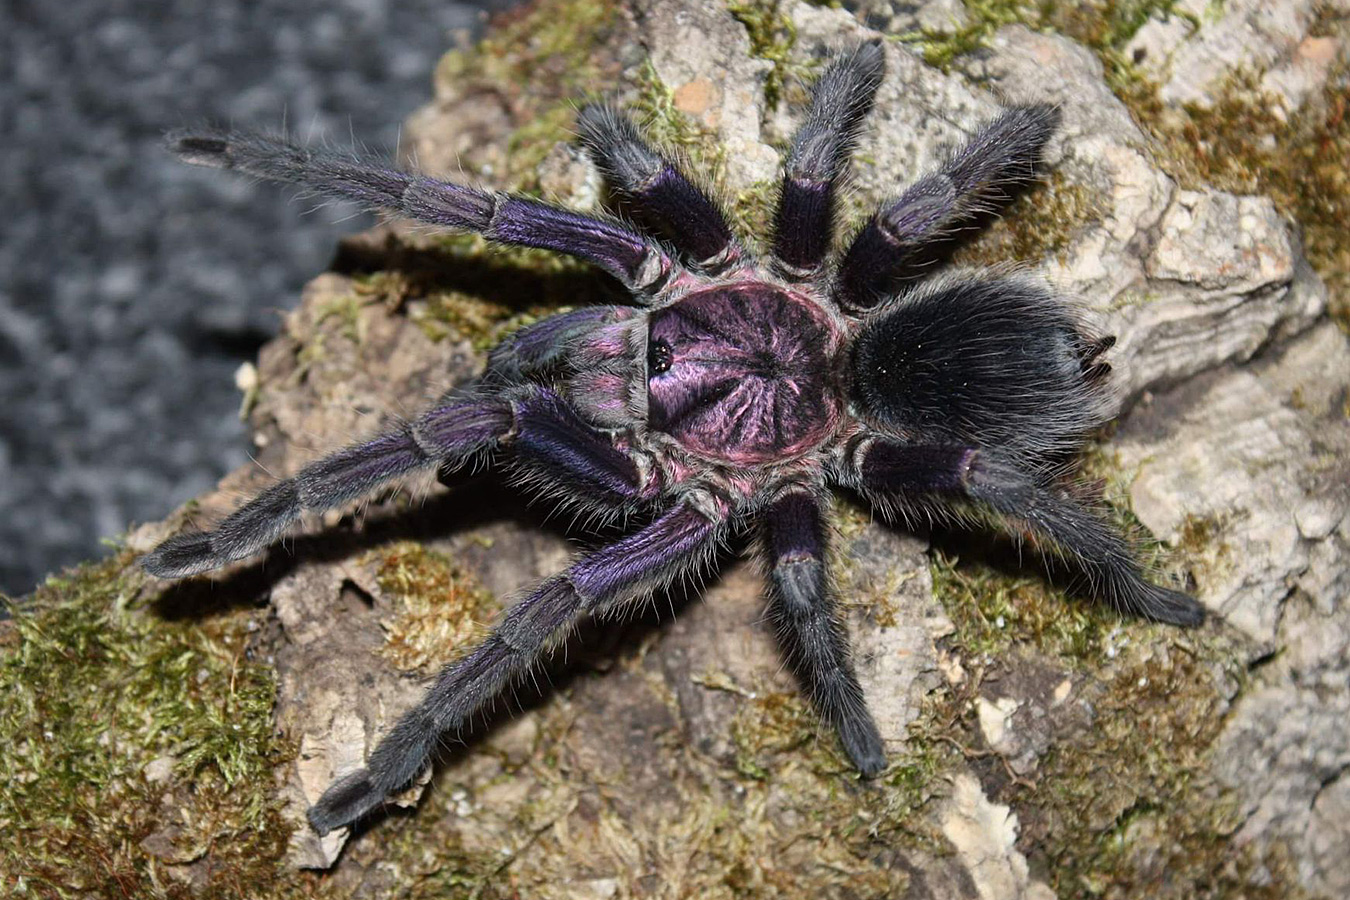 Phormictopus sp. “Dominican purple” 4cm